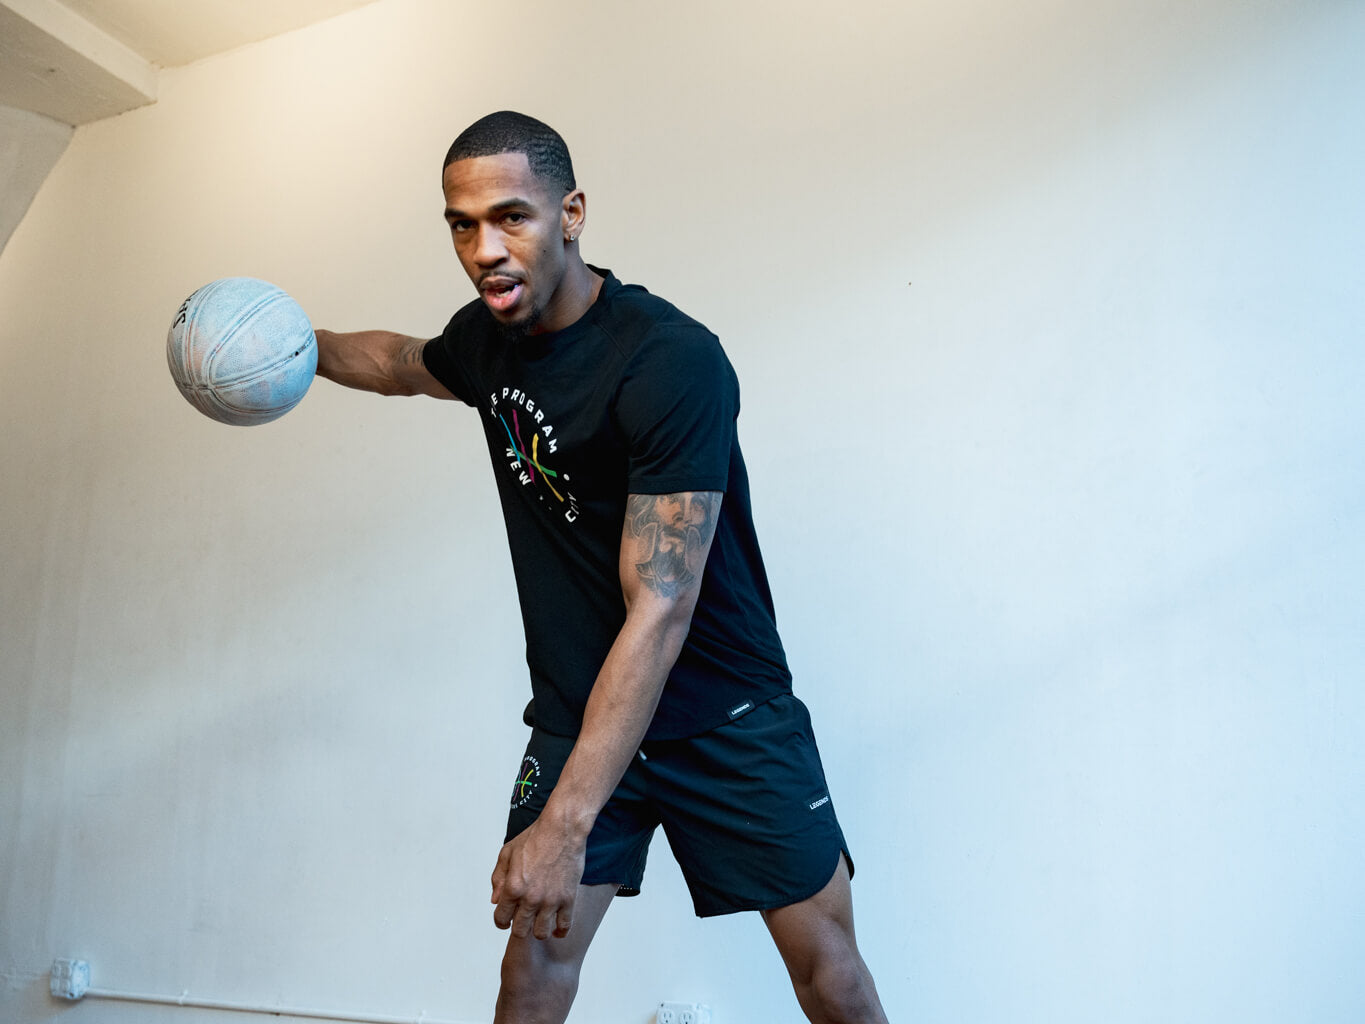 Basketball player wearing The Program NYC black t-shirt